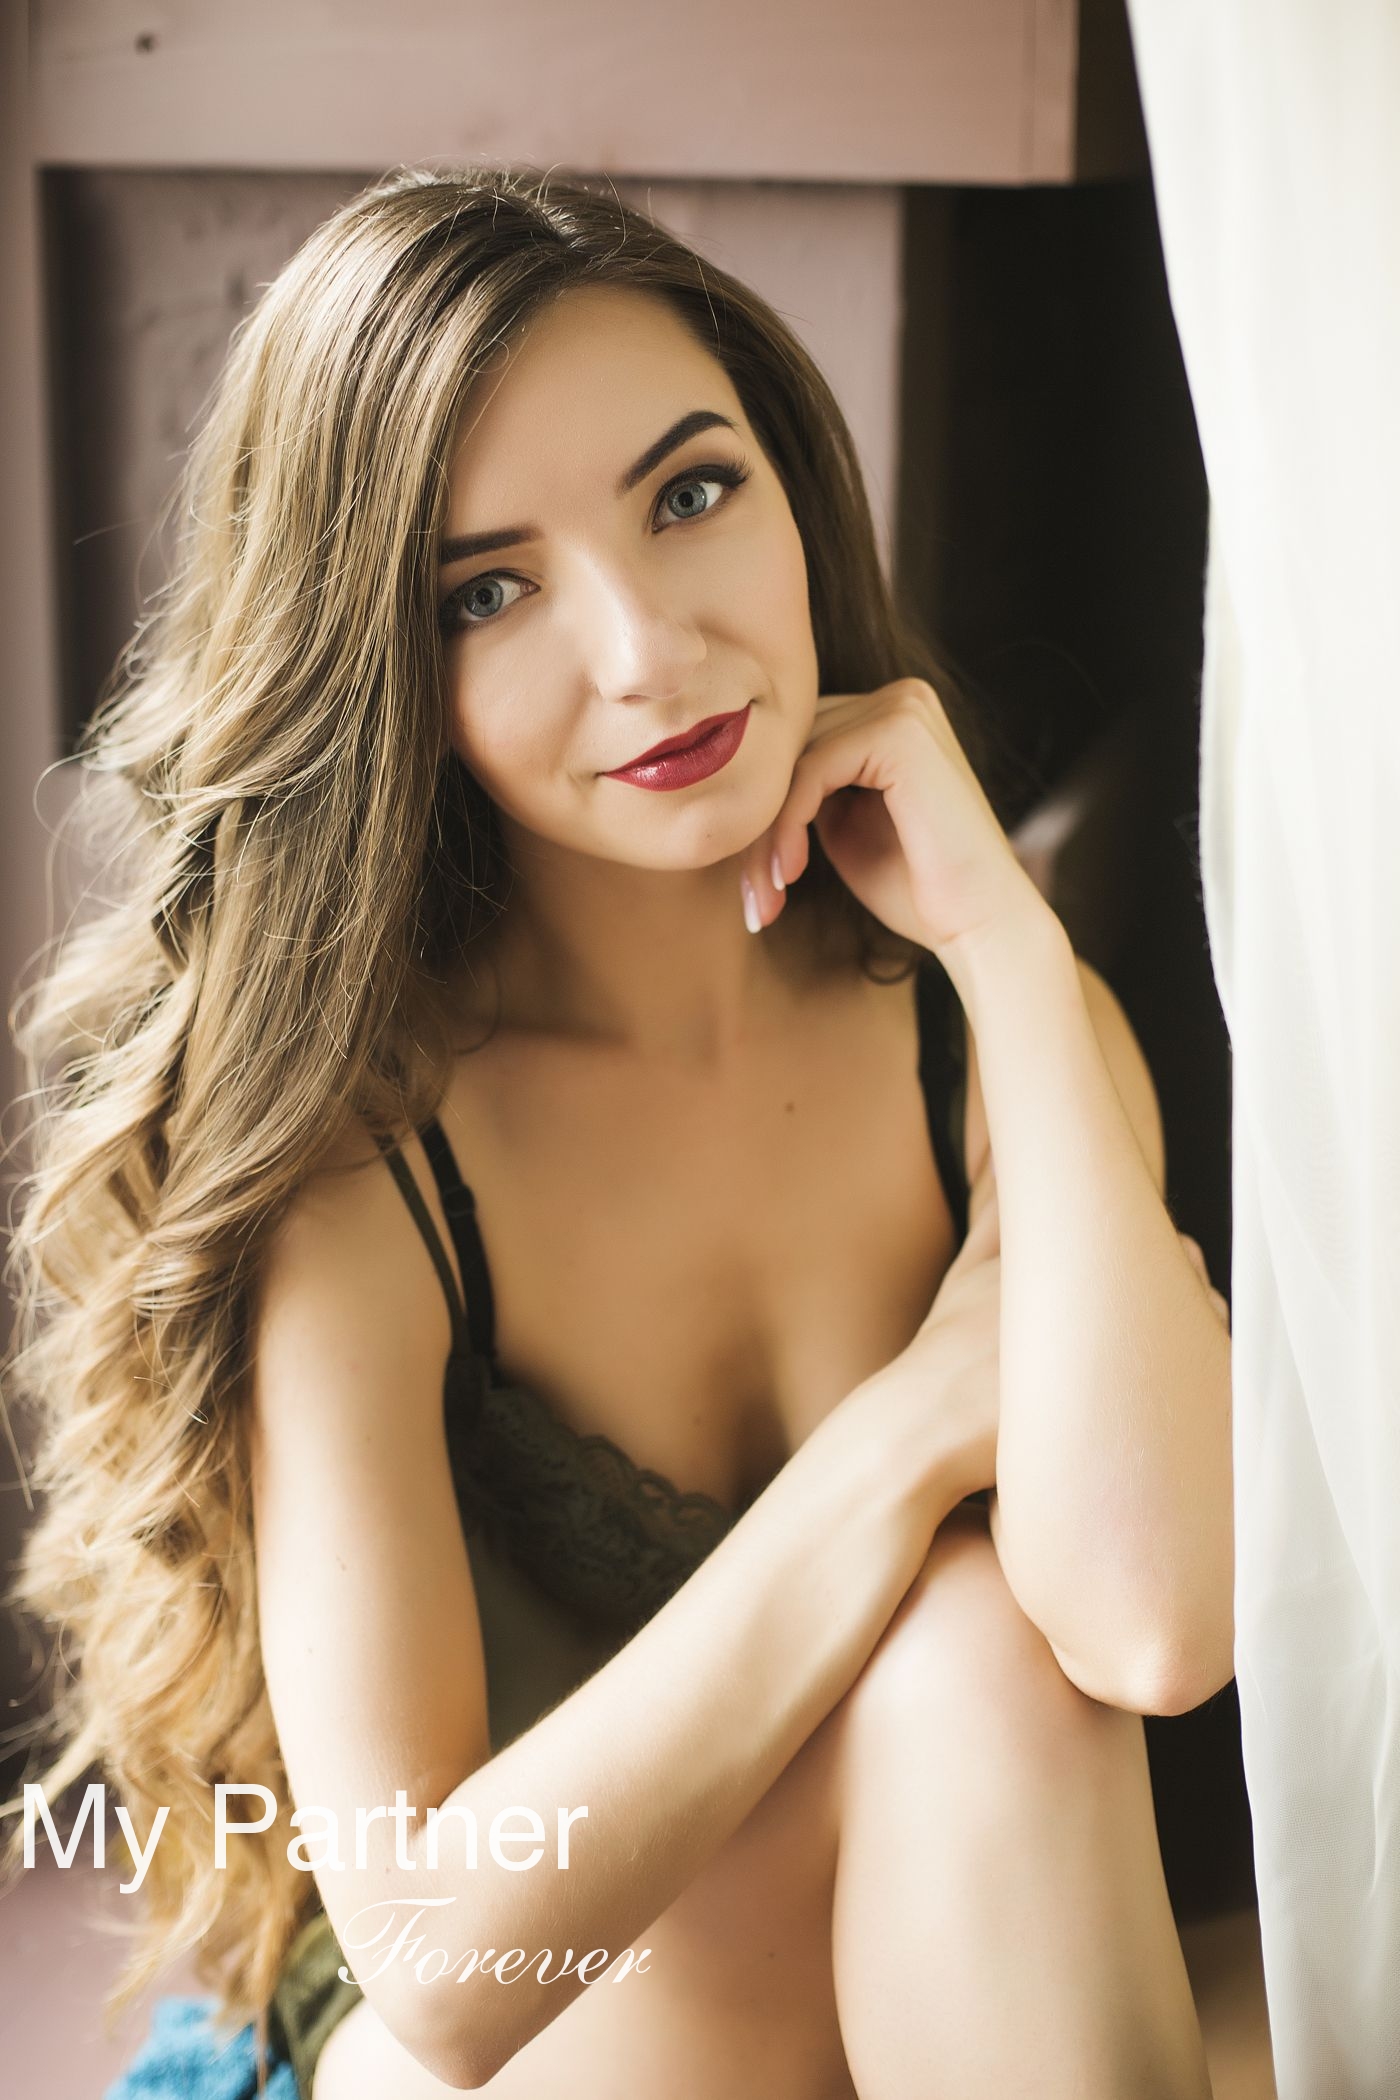 Datingsite to Meet Sexy Ukrainian Lady Evgeniya from Kiev, Ukraine